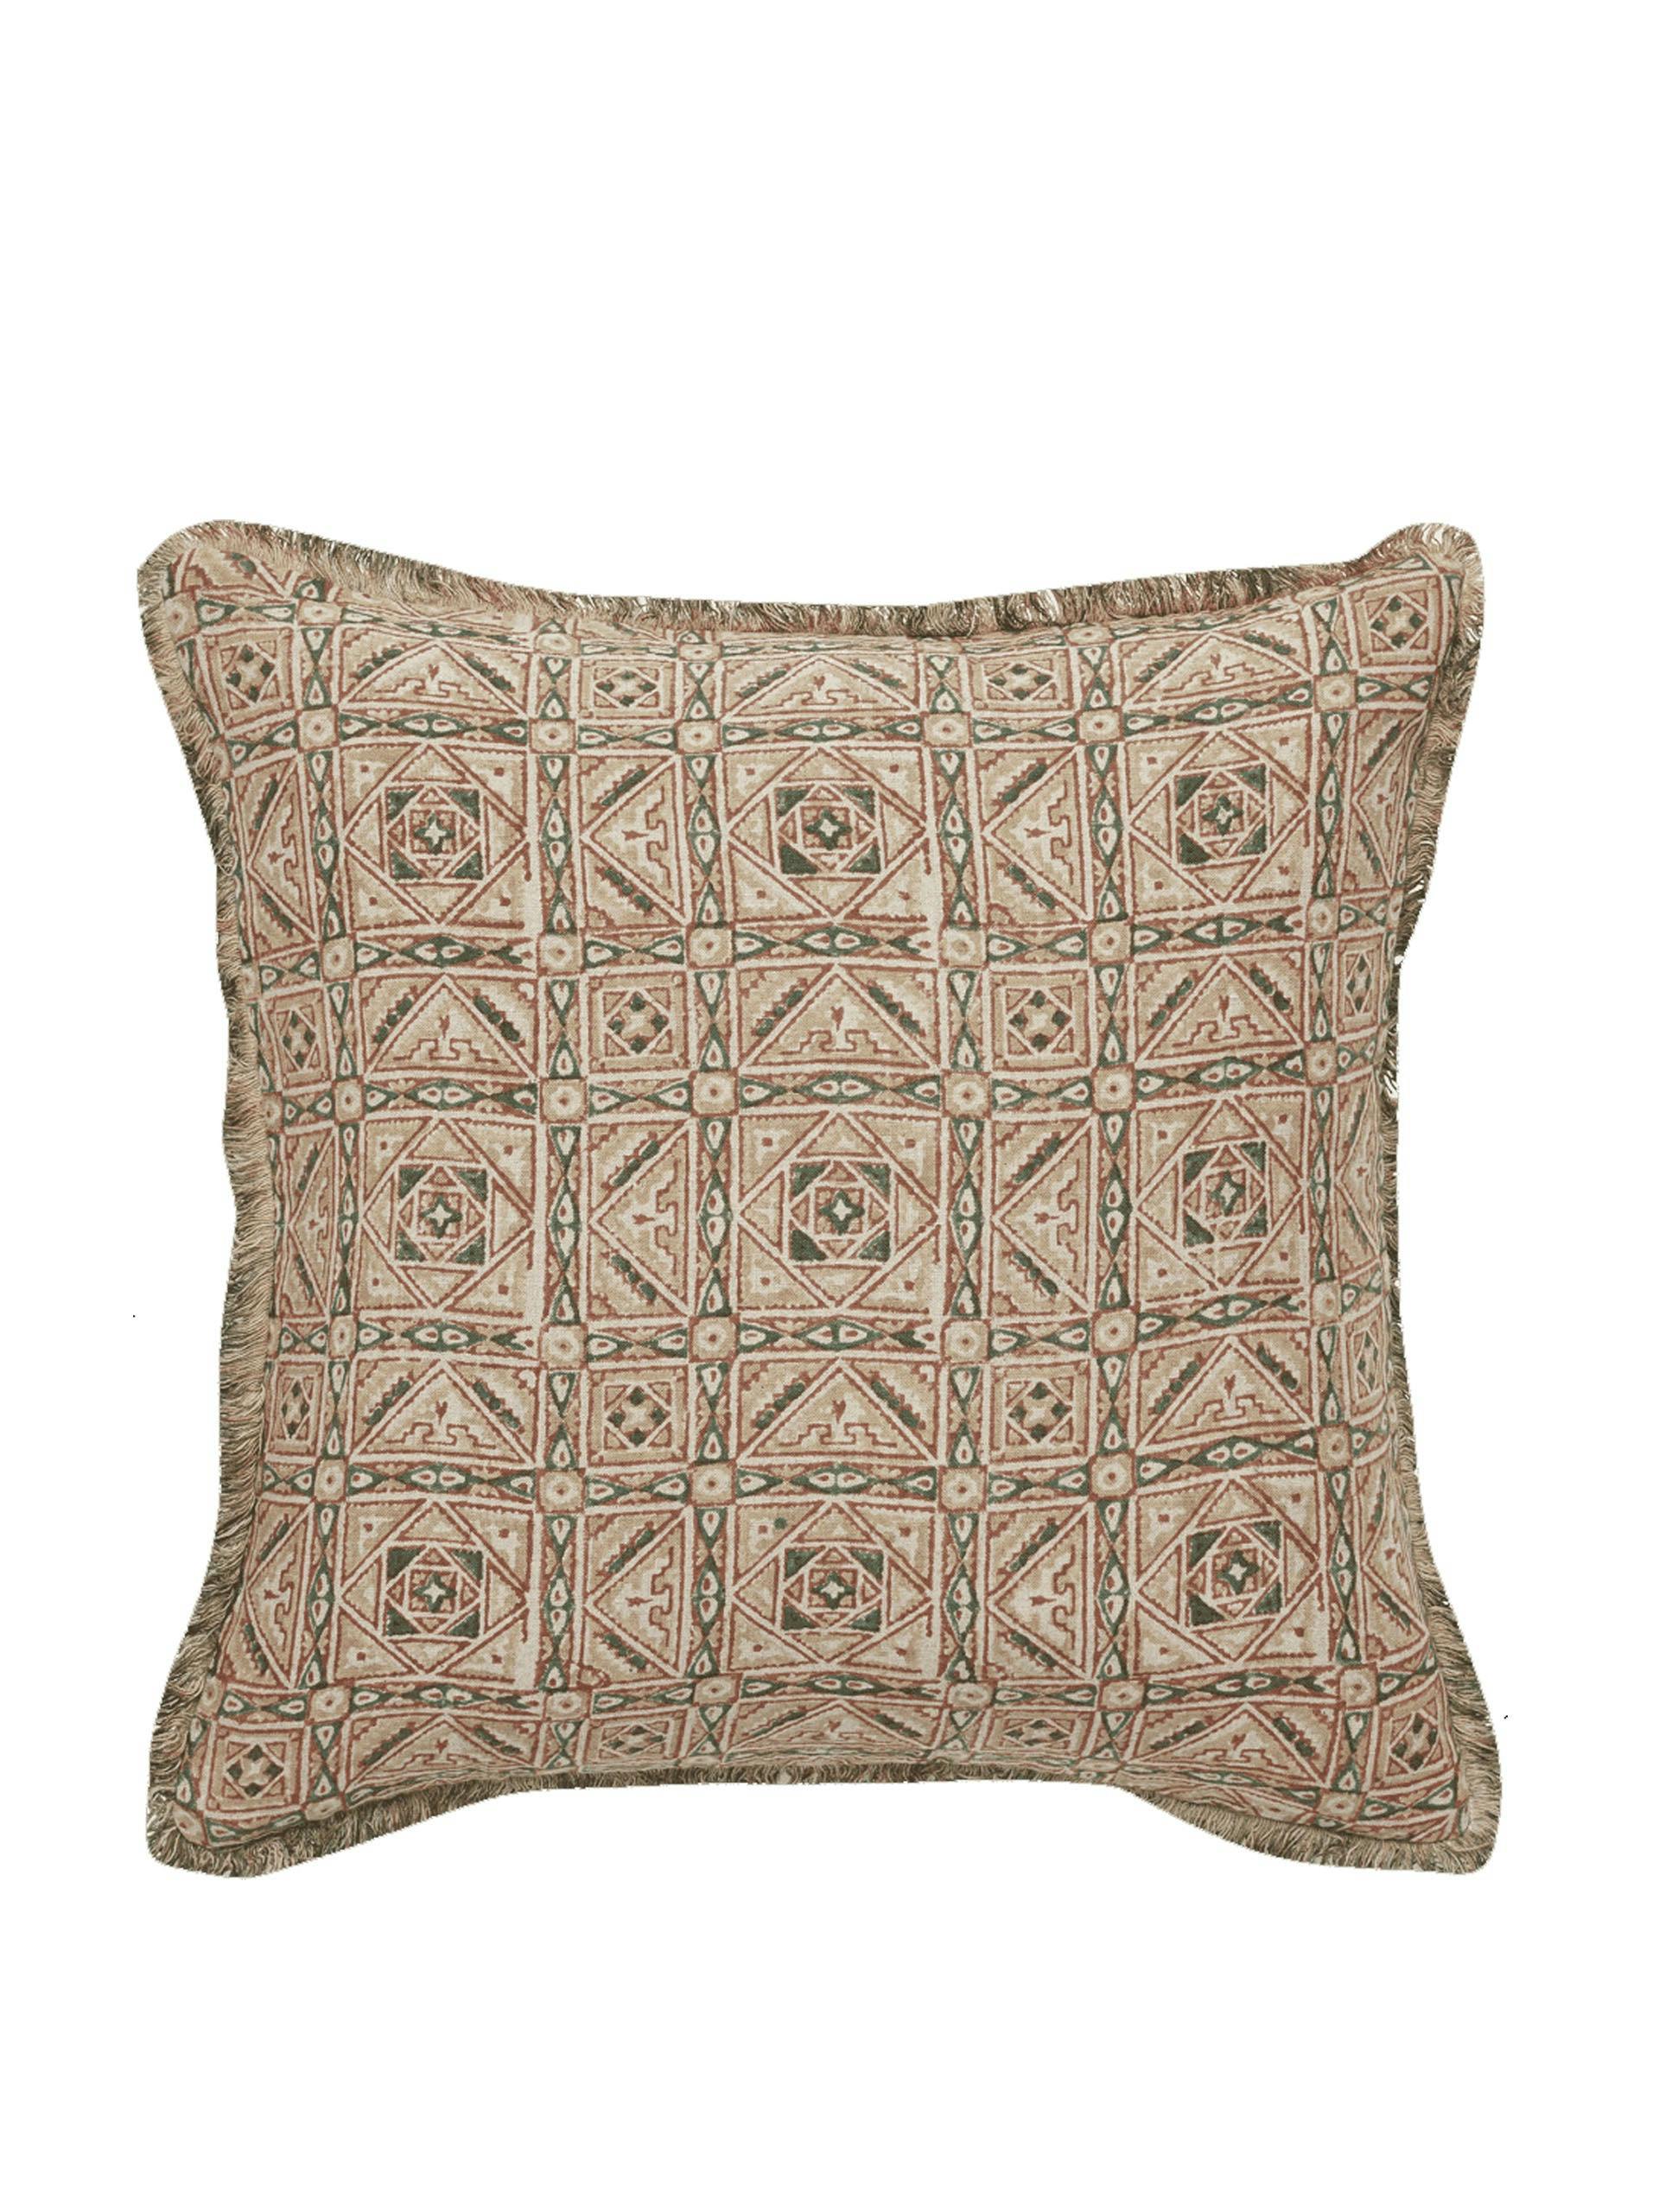 Goa cushion cover